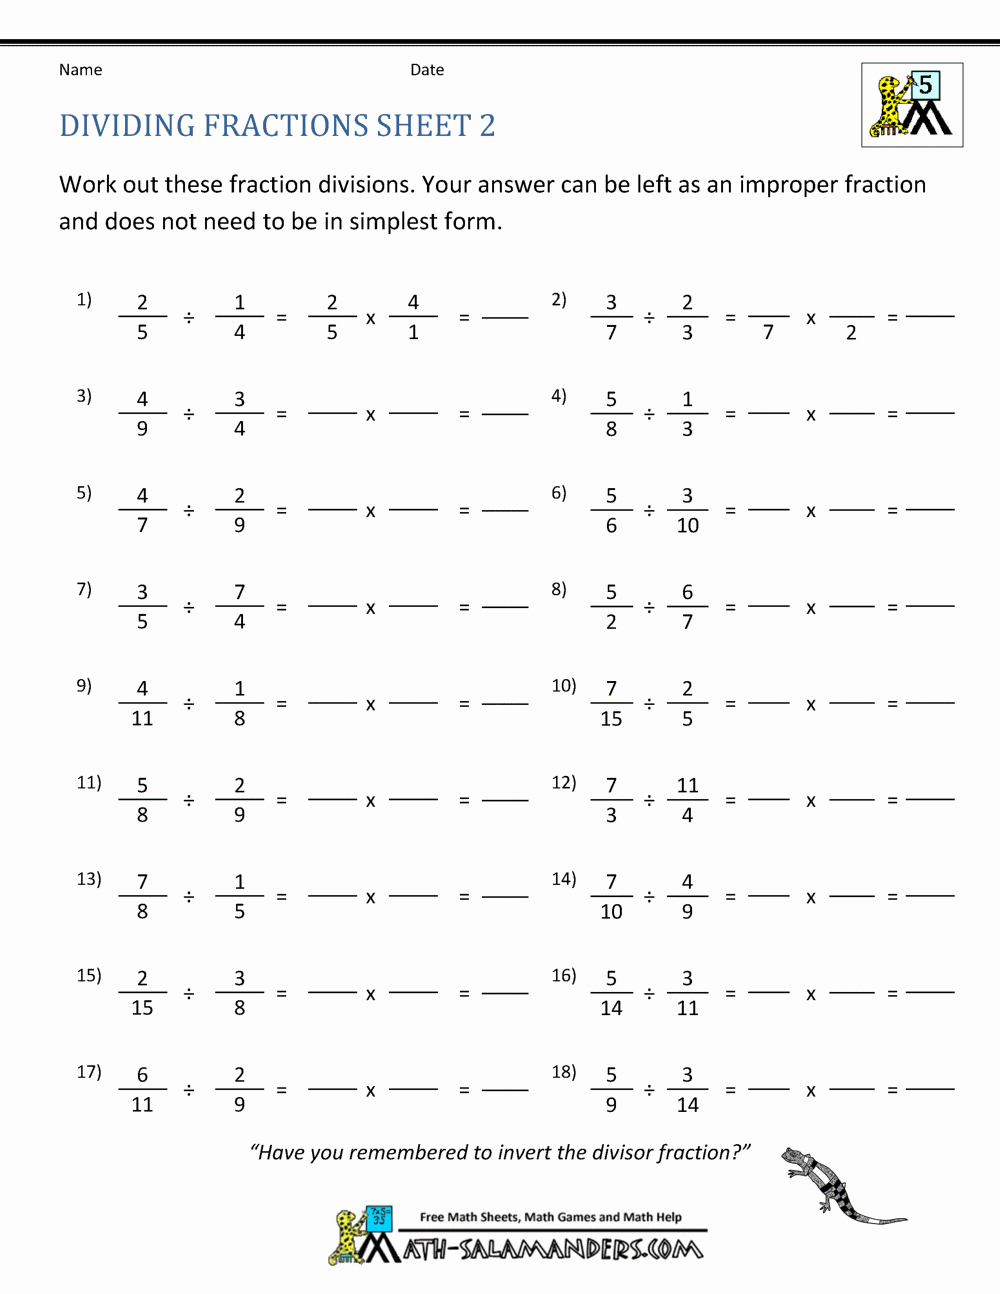 Dividing Fractions Word Problems Worksheet Awesome Dividing Fractions with whole Numbers Word Problems